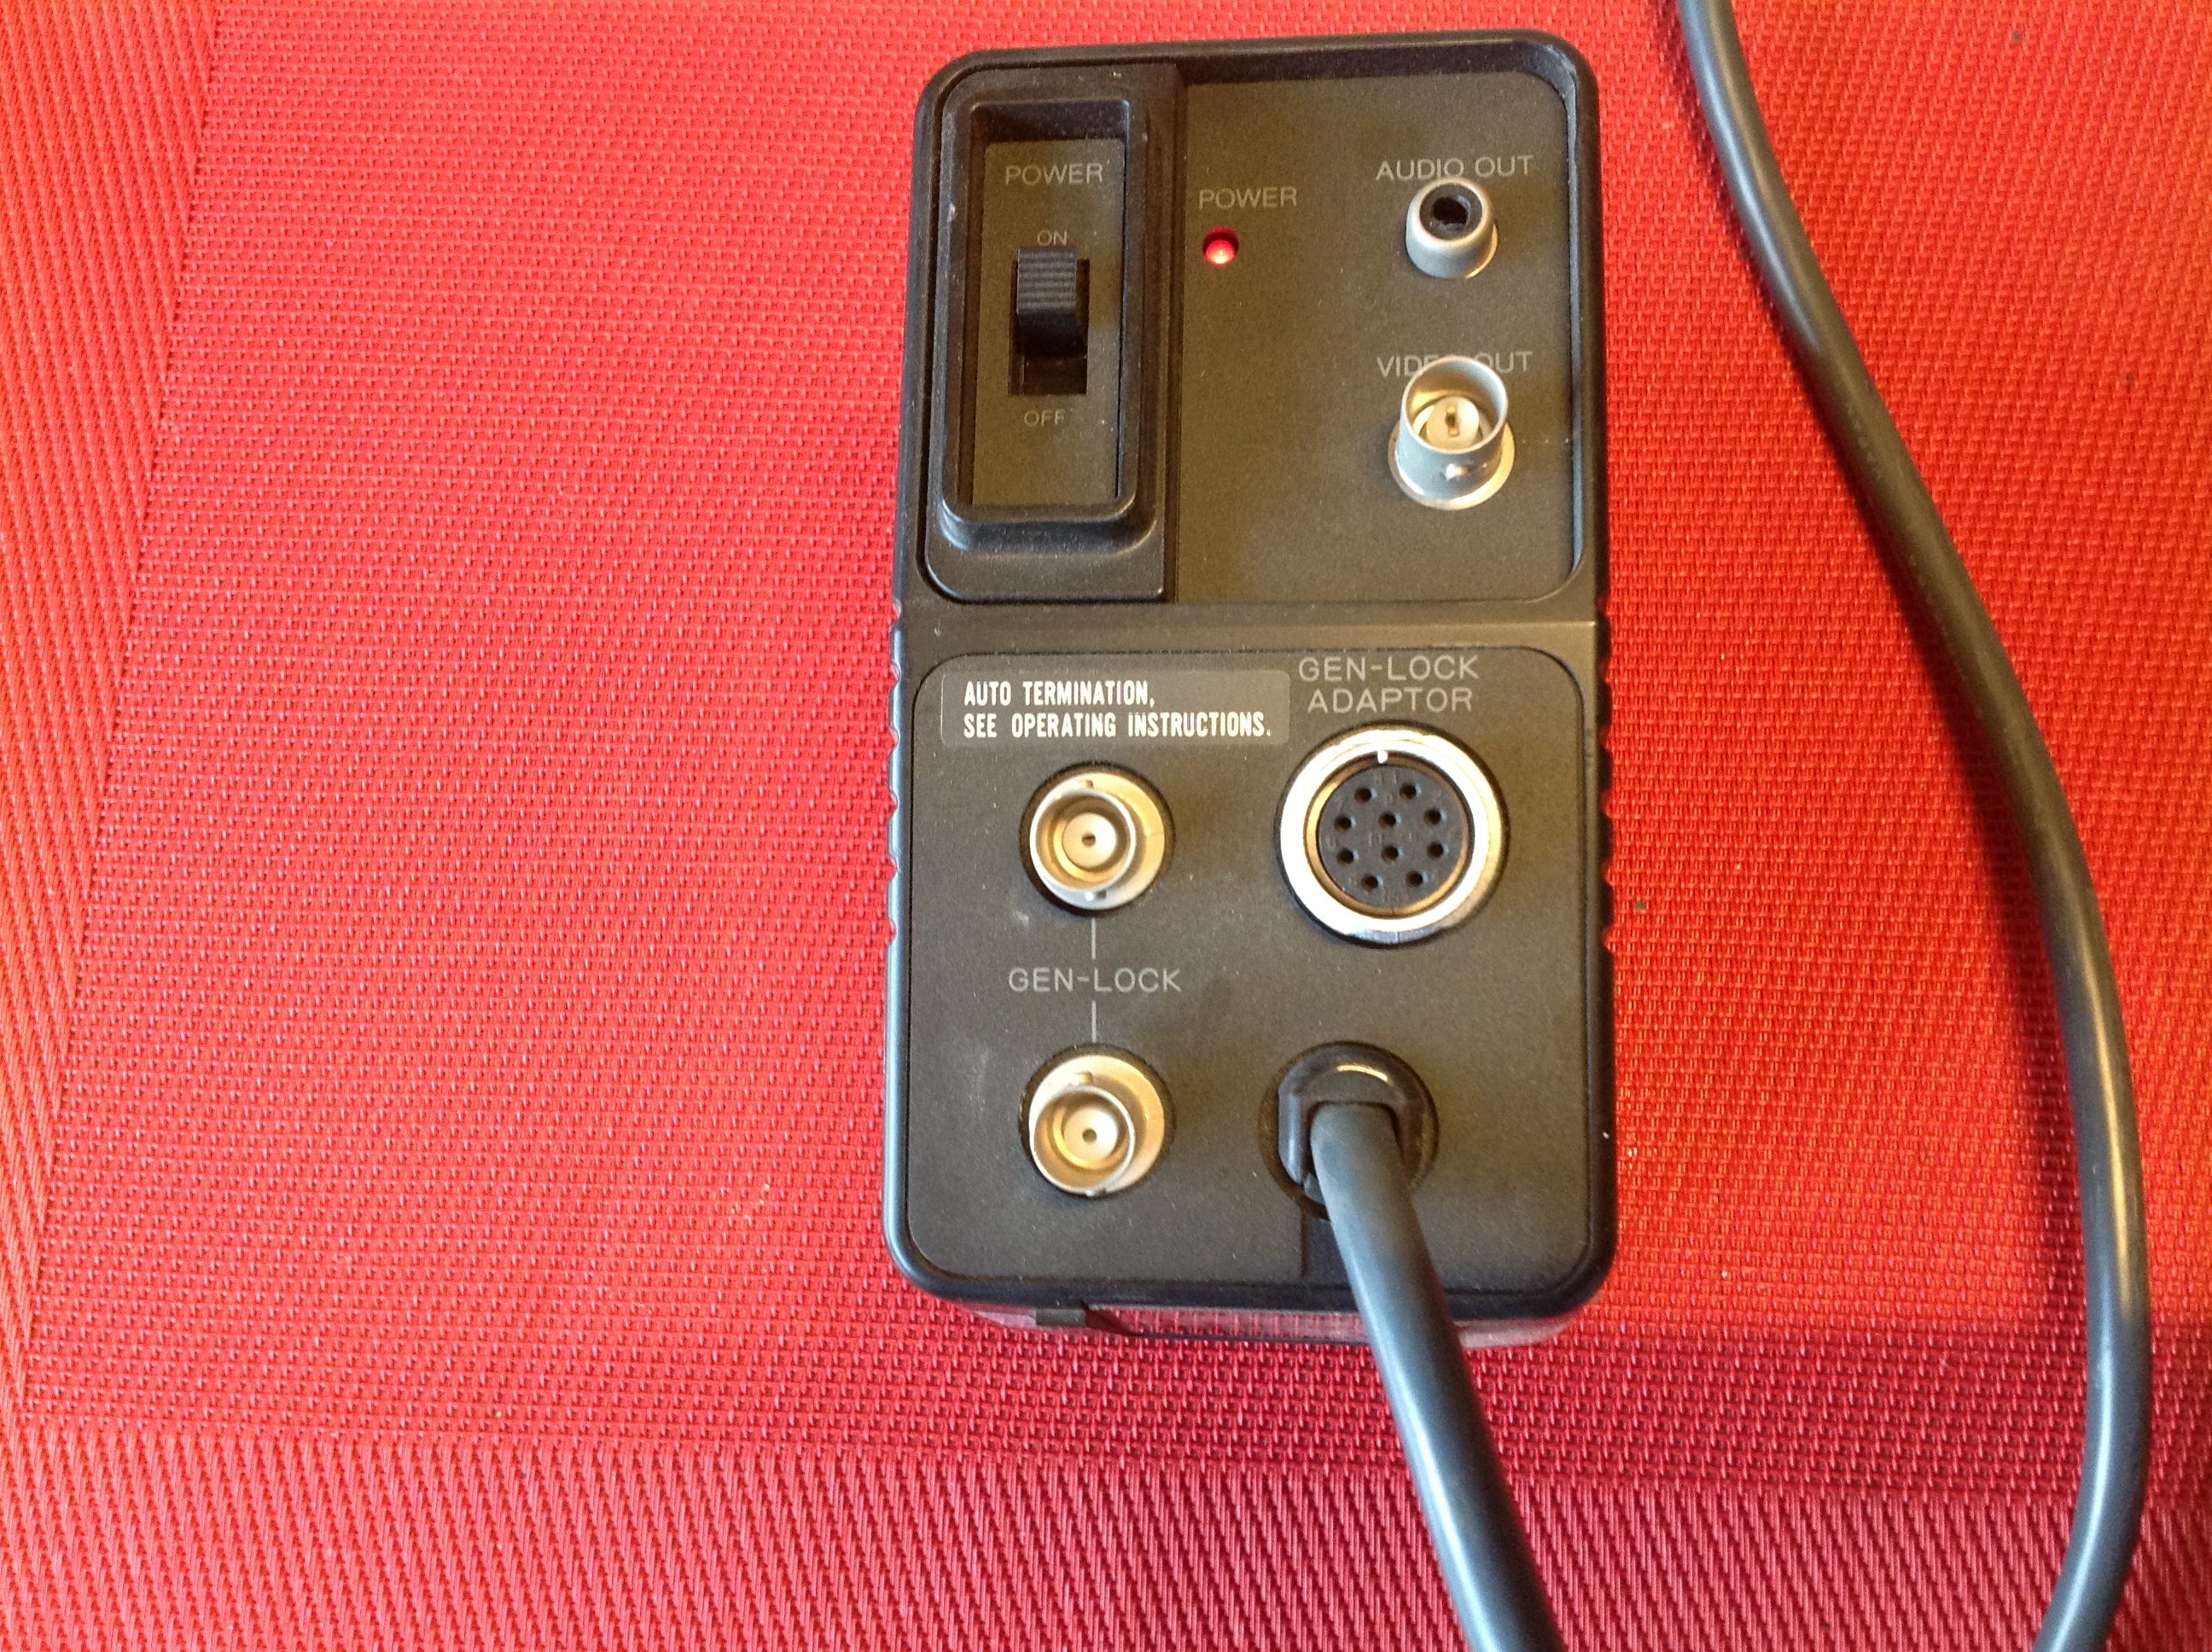 Panasonic WV-PS03/G - Gen-Lock Adaptor DC Adapter Kamera/Camcorder Power Supply 